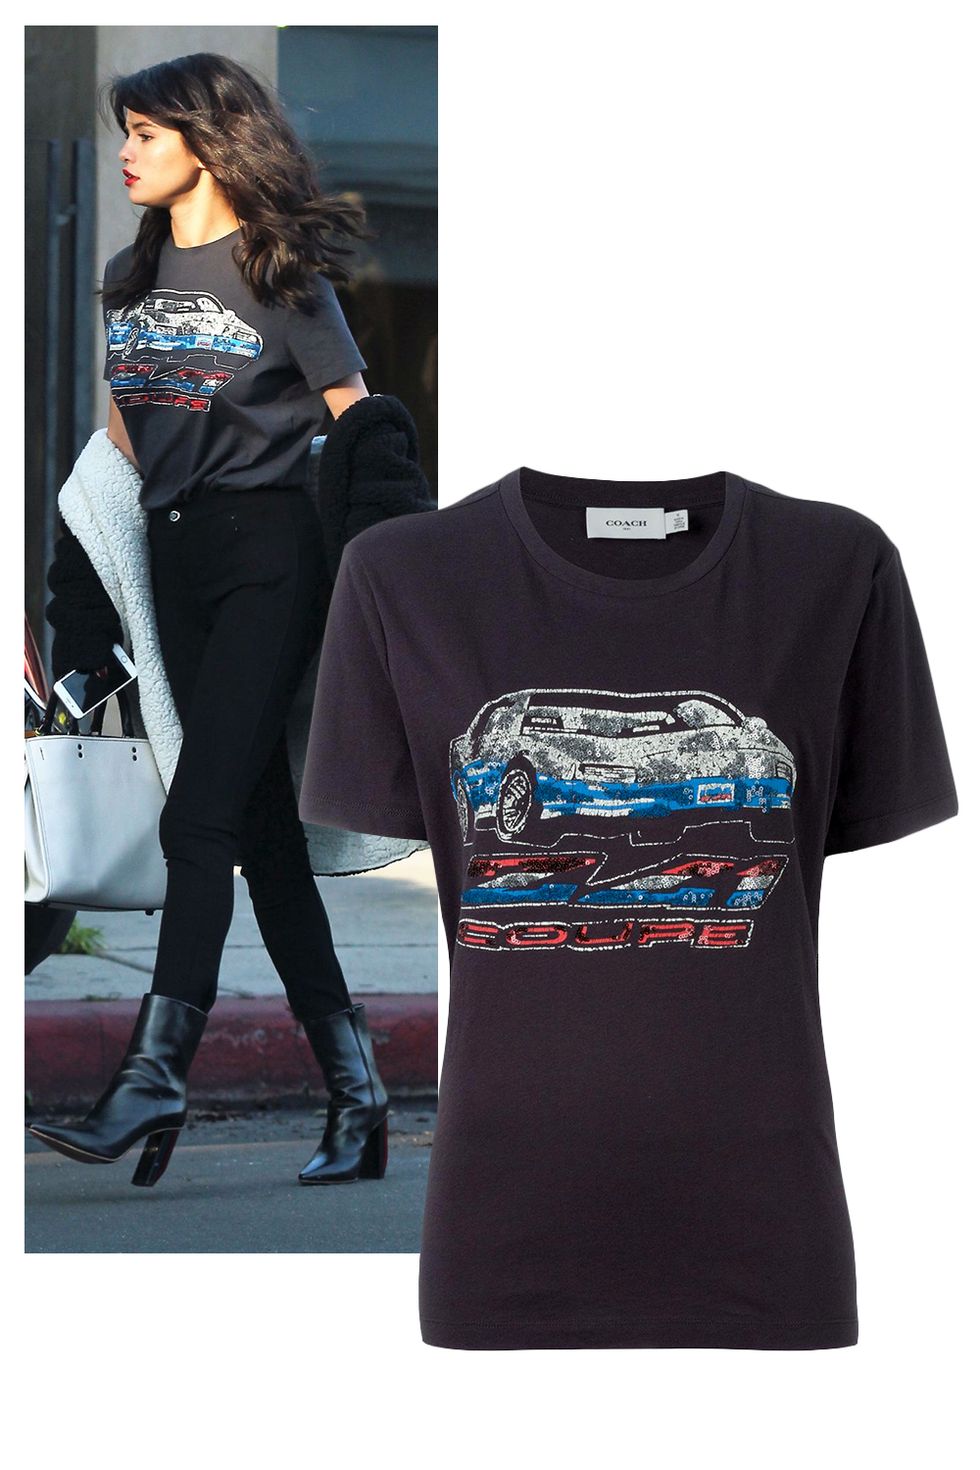 <p>Selena Gomez Sequinned Car Print T-Shirt, $212;&nbsp;<a href="https://www.farfetch.com/shopping/women/coach-sequinned-car-print-t-shirt-item-11824238.aspx" target="_blank" data-tracking-id="recirc-text-link">farfetch.com</a></p>